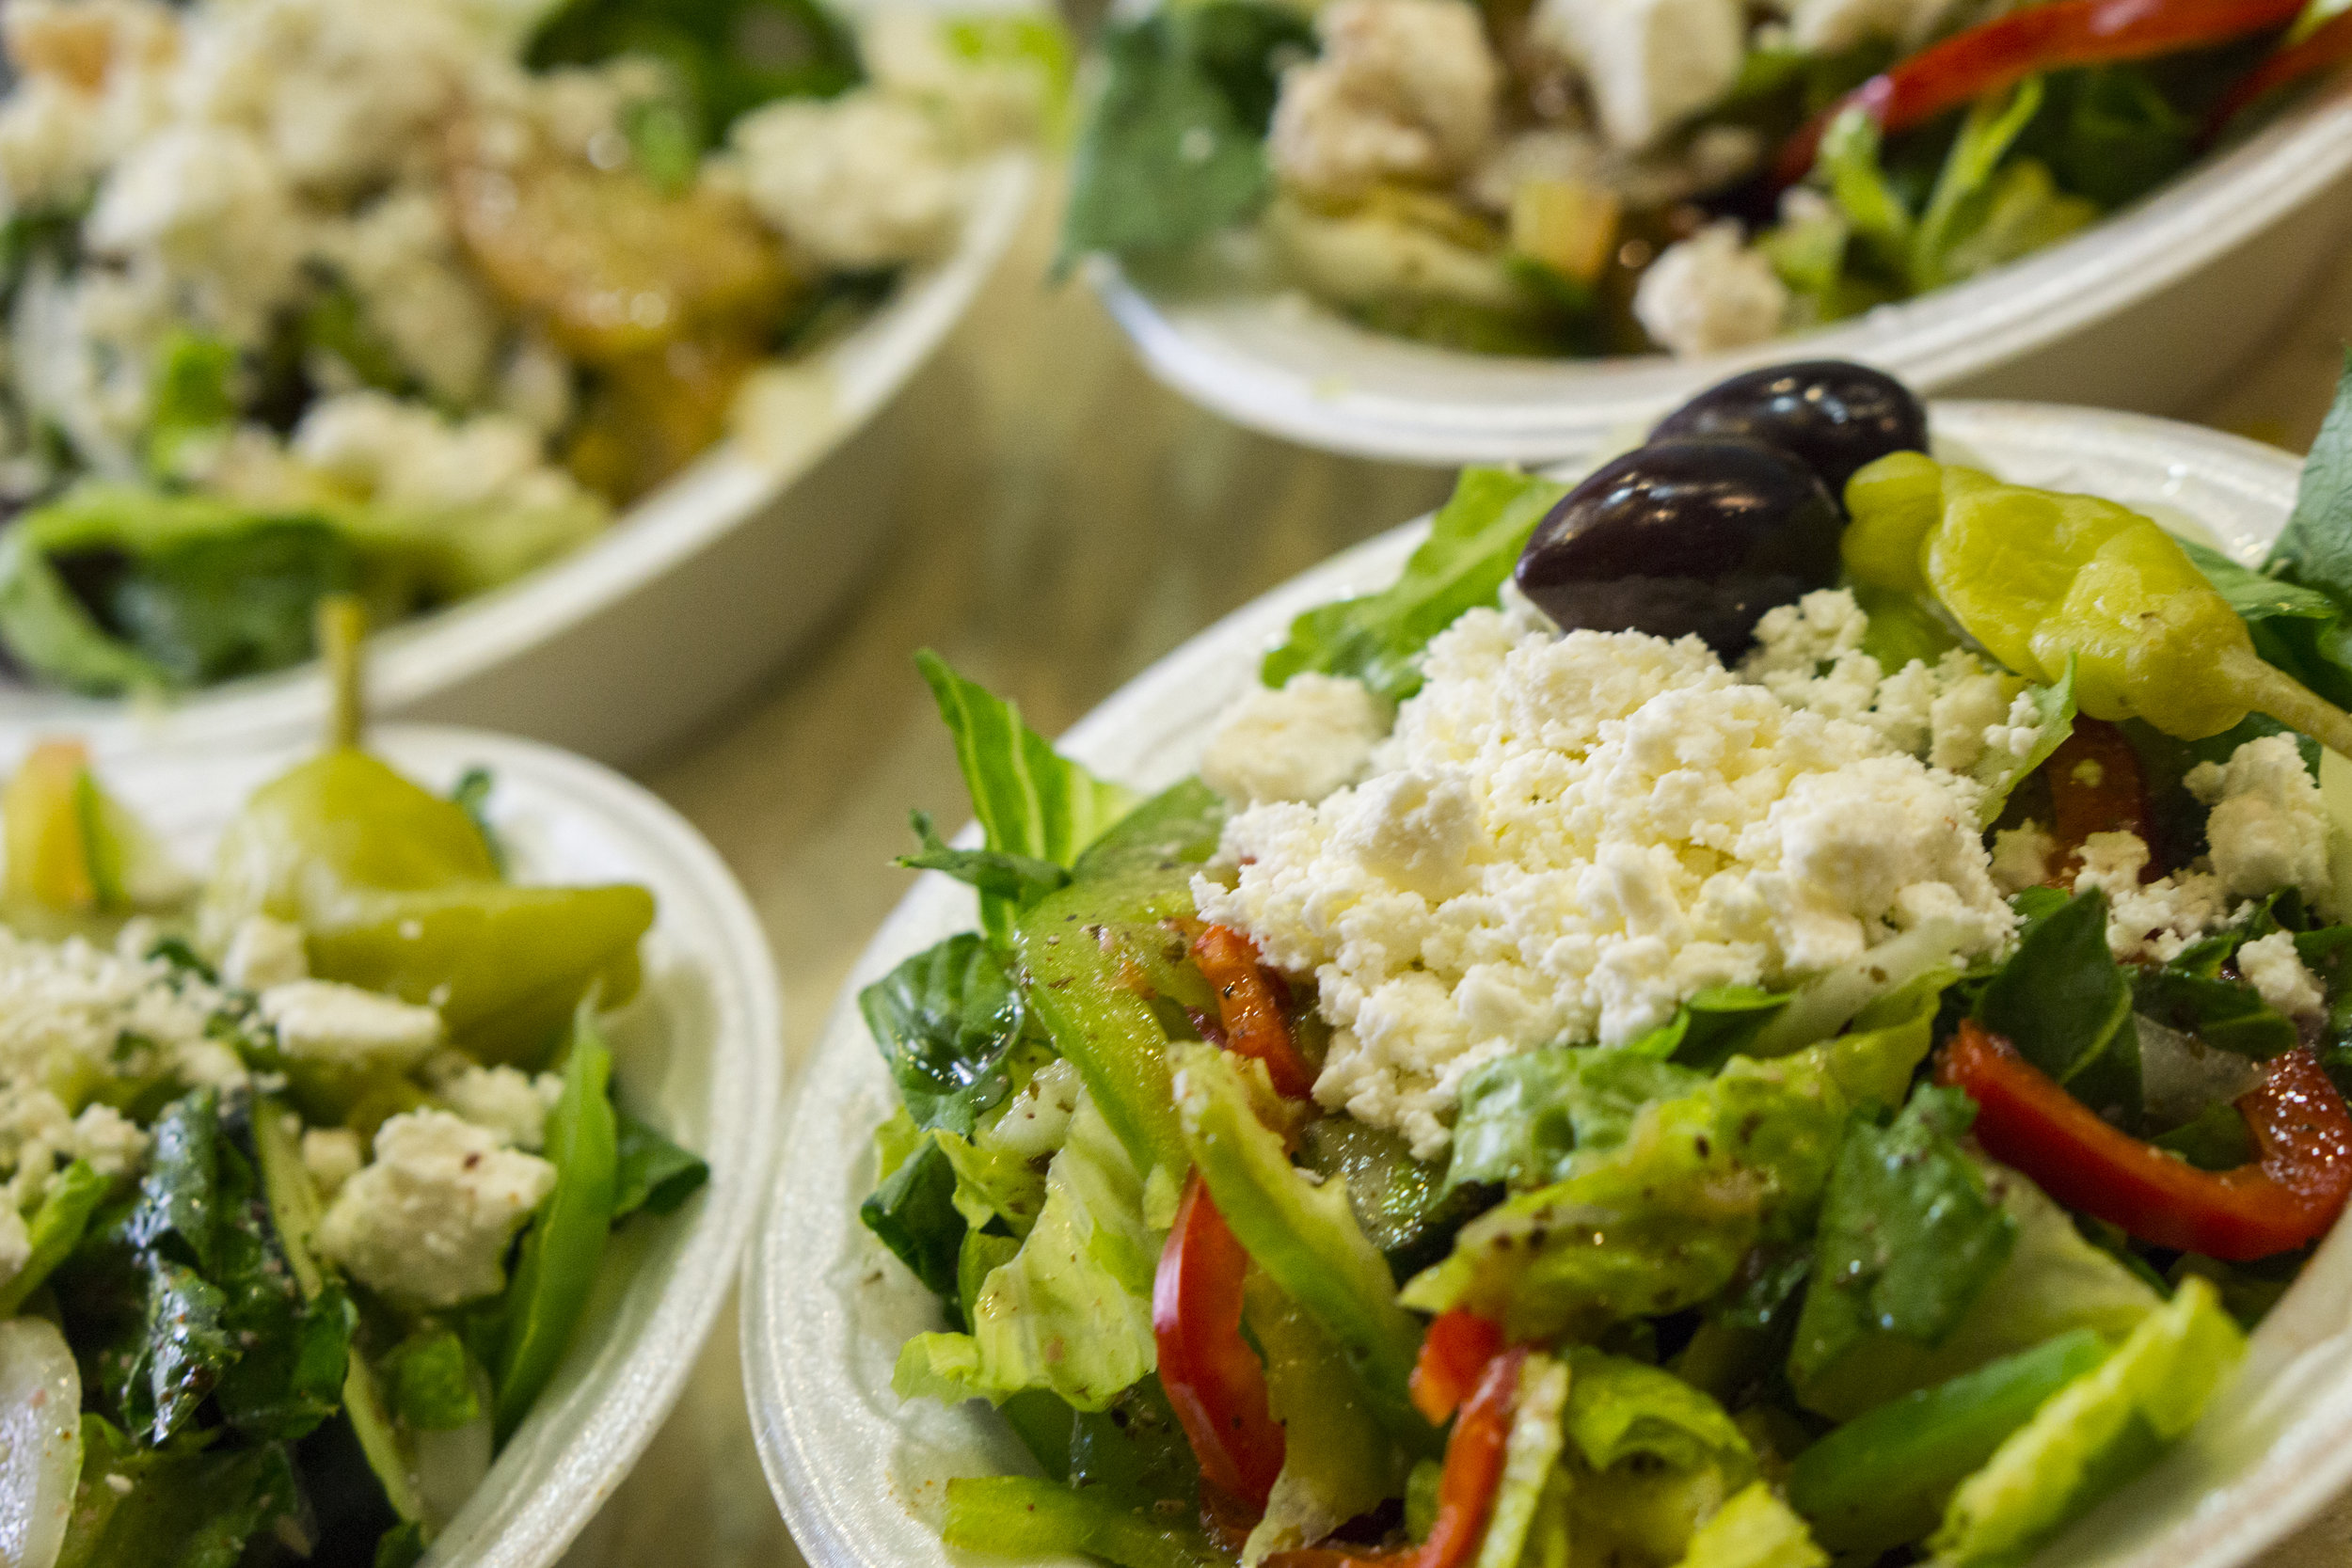 Greek Salad with Feta Cheese